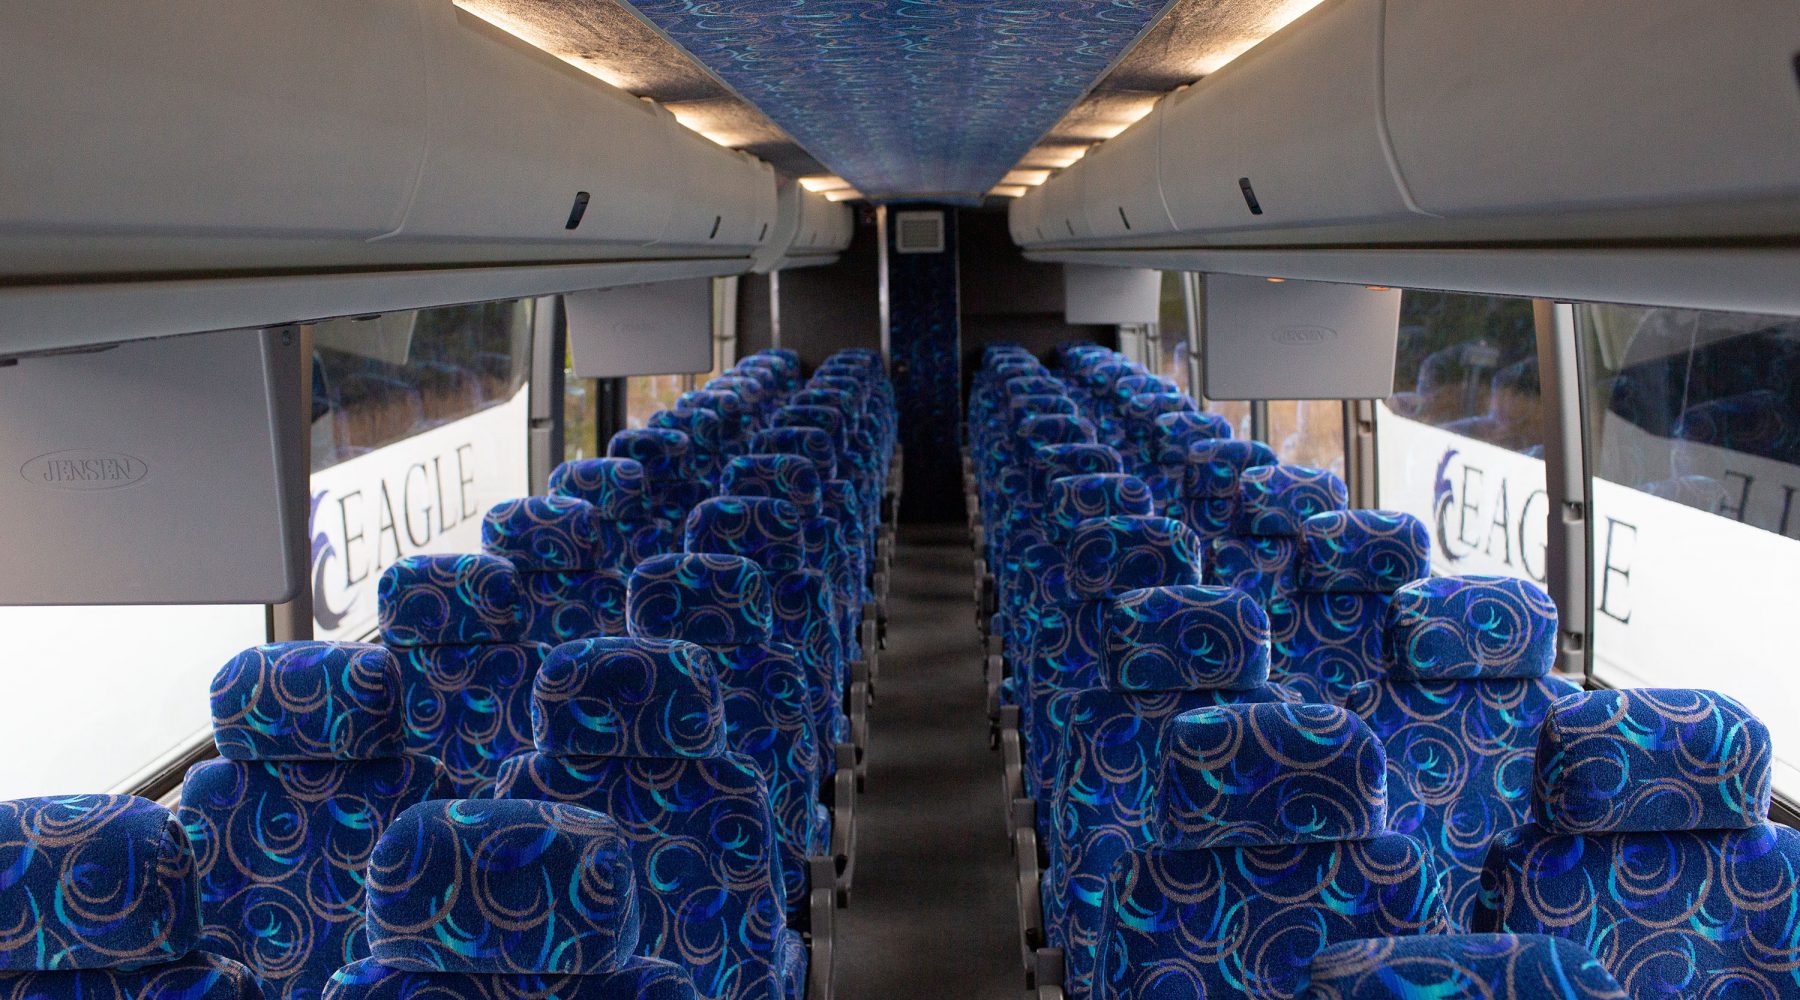 Rows of empty bus seats